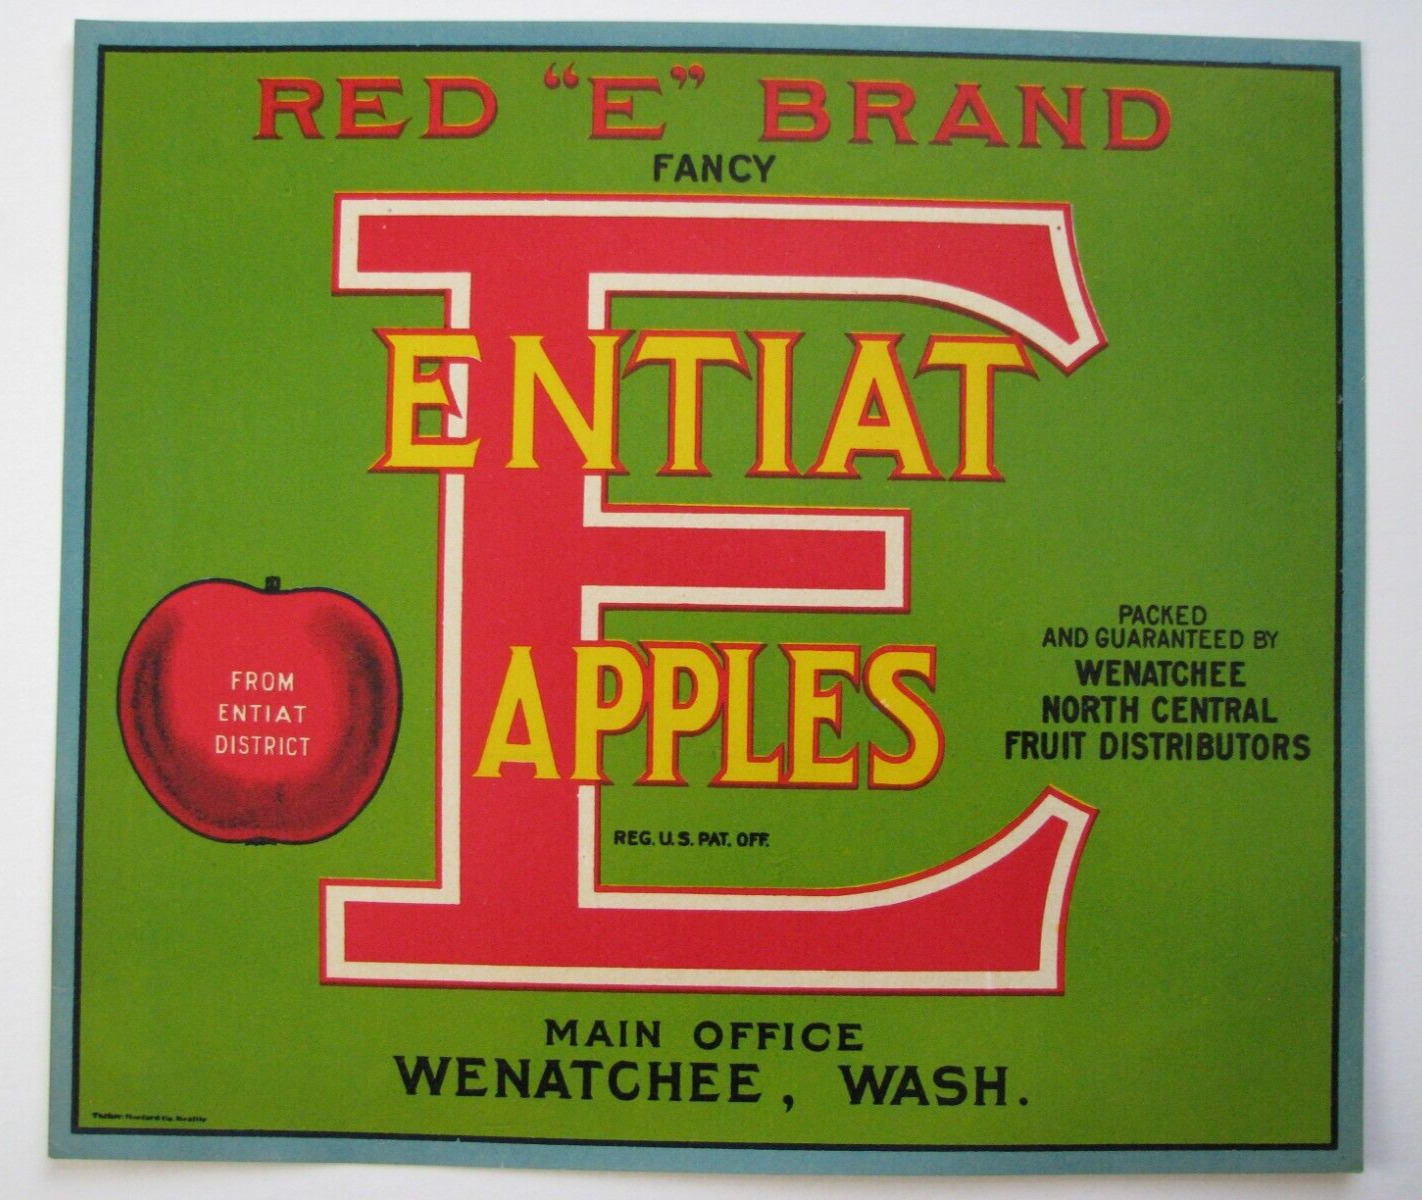 Original RED E apple crate label Entiat District Wenatchee North Central Fruit